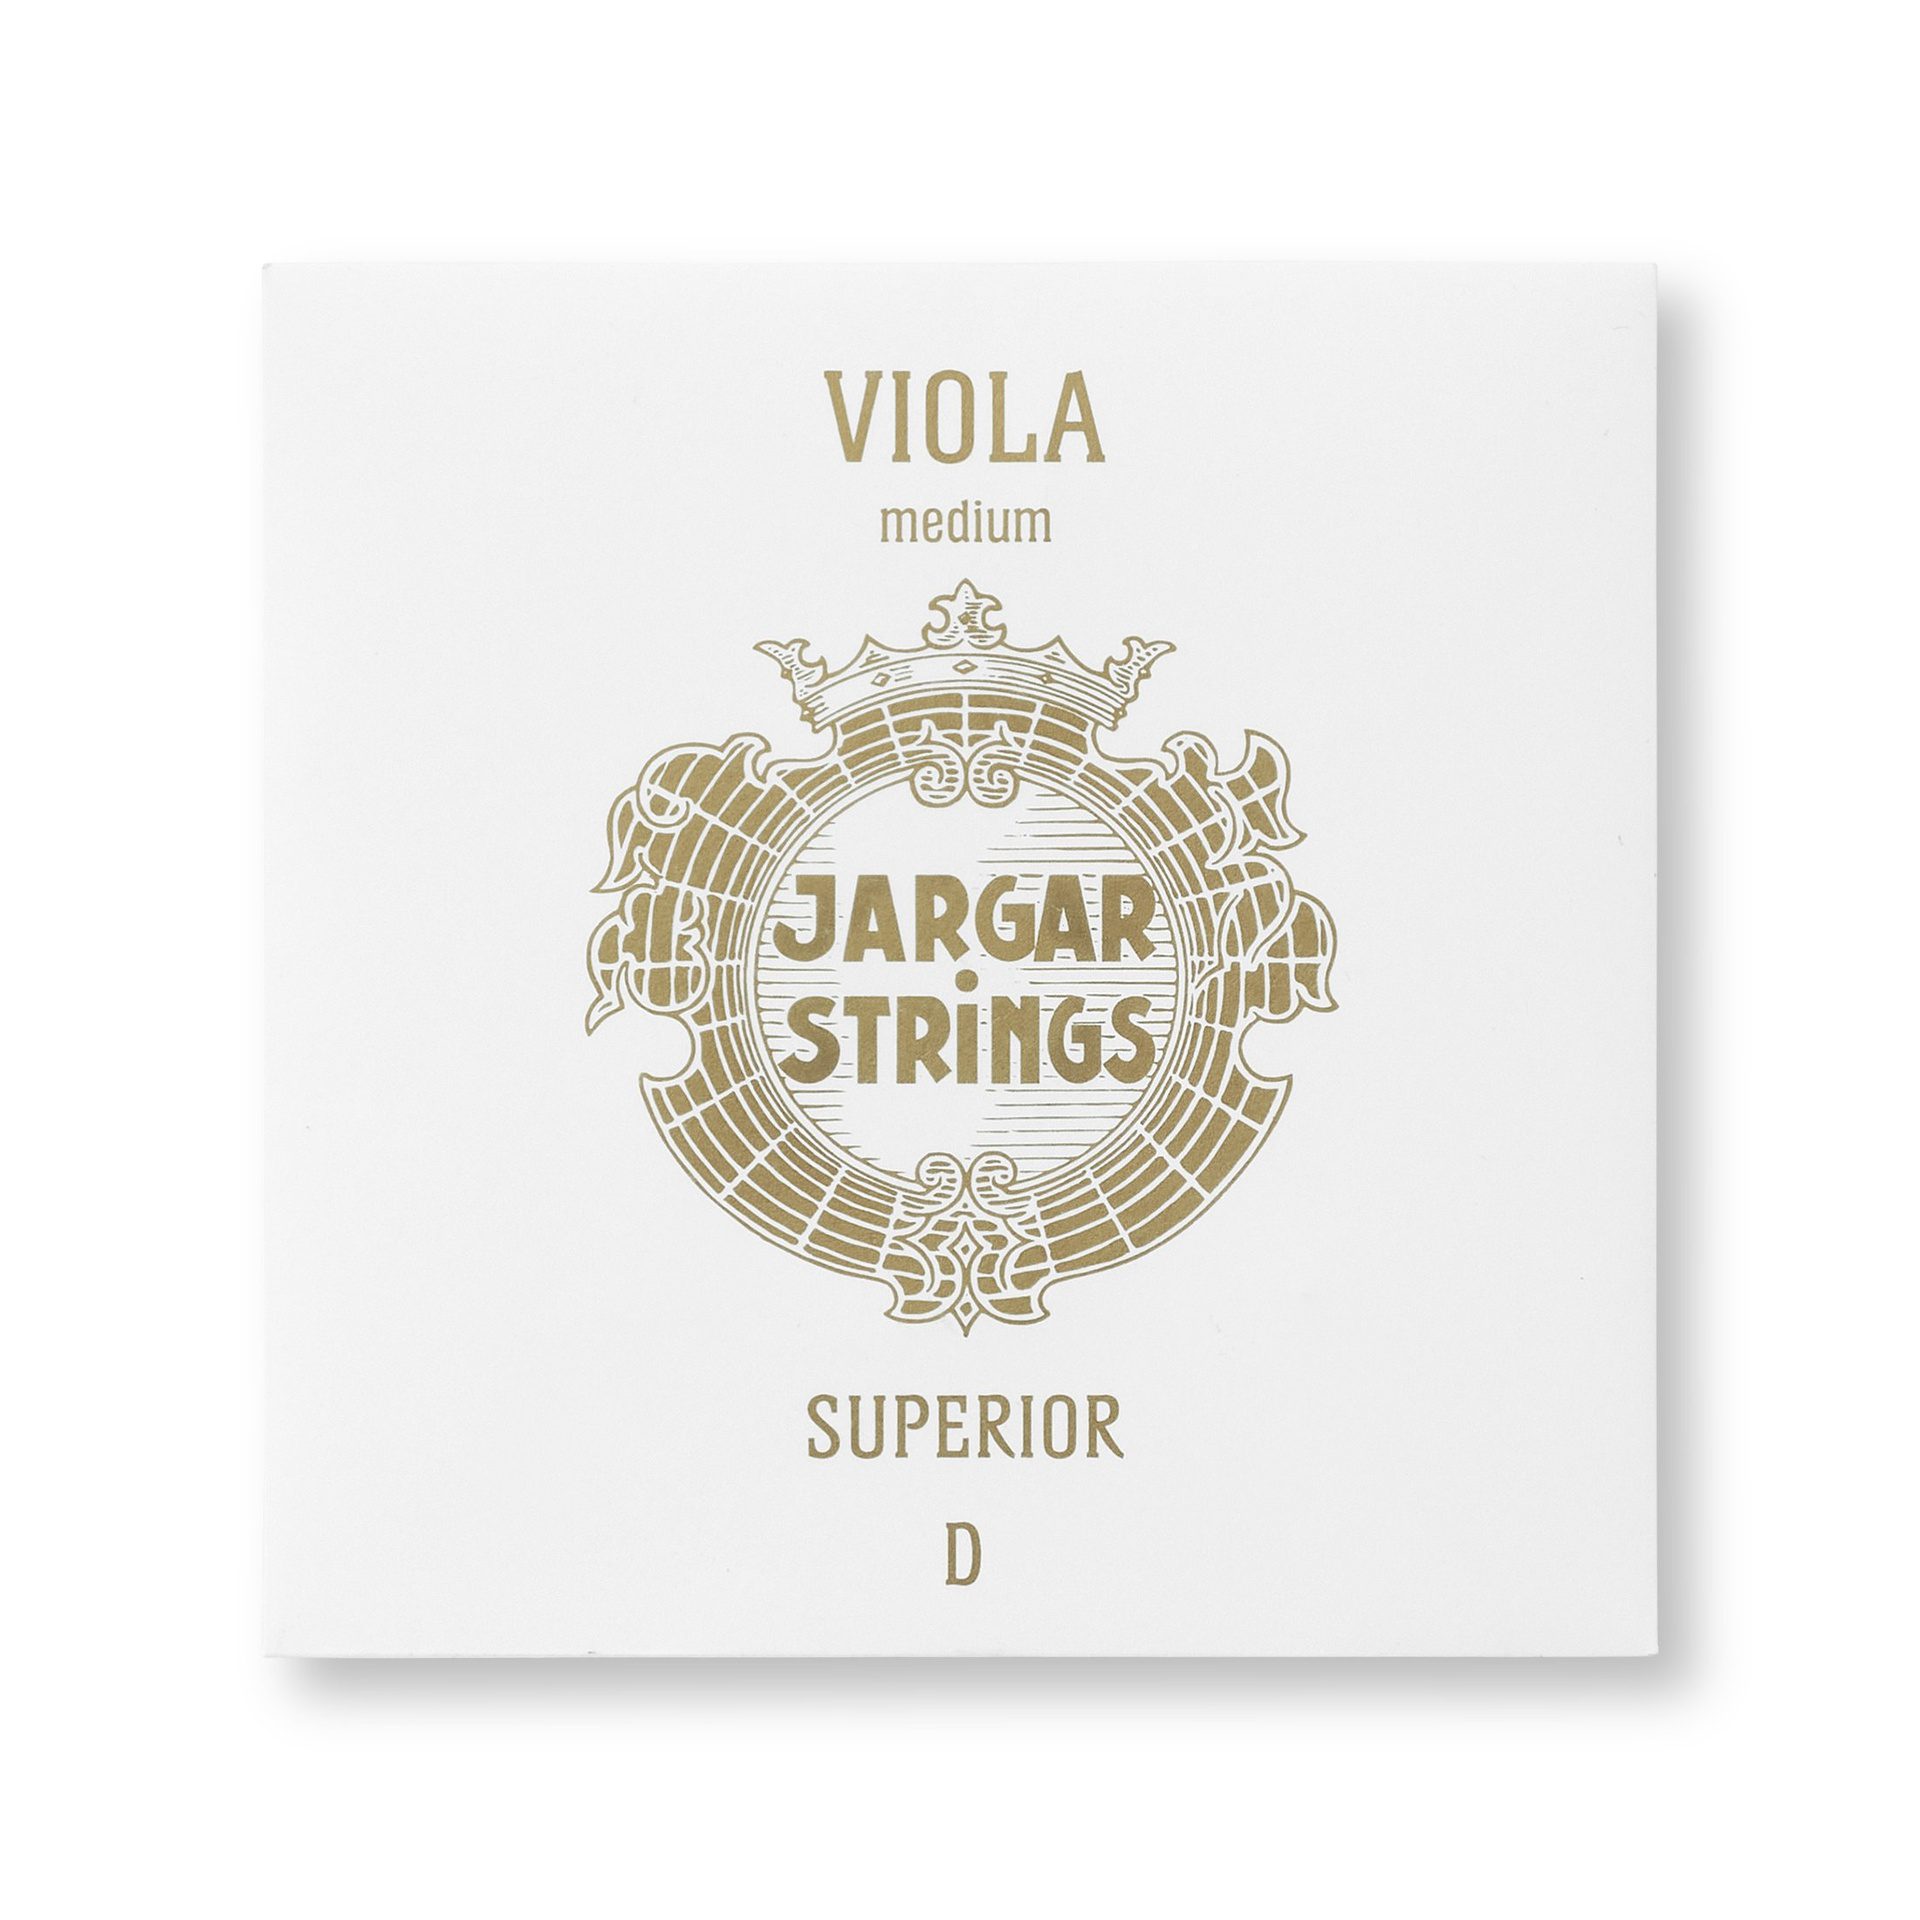 Superior Viola - Medium, Single D String, 4/4